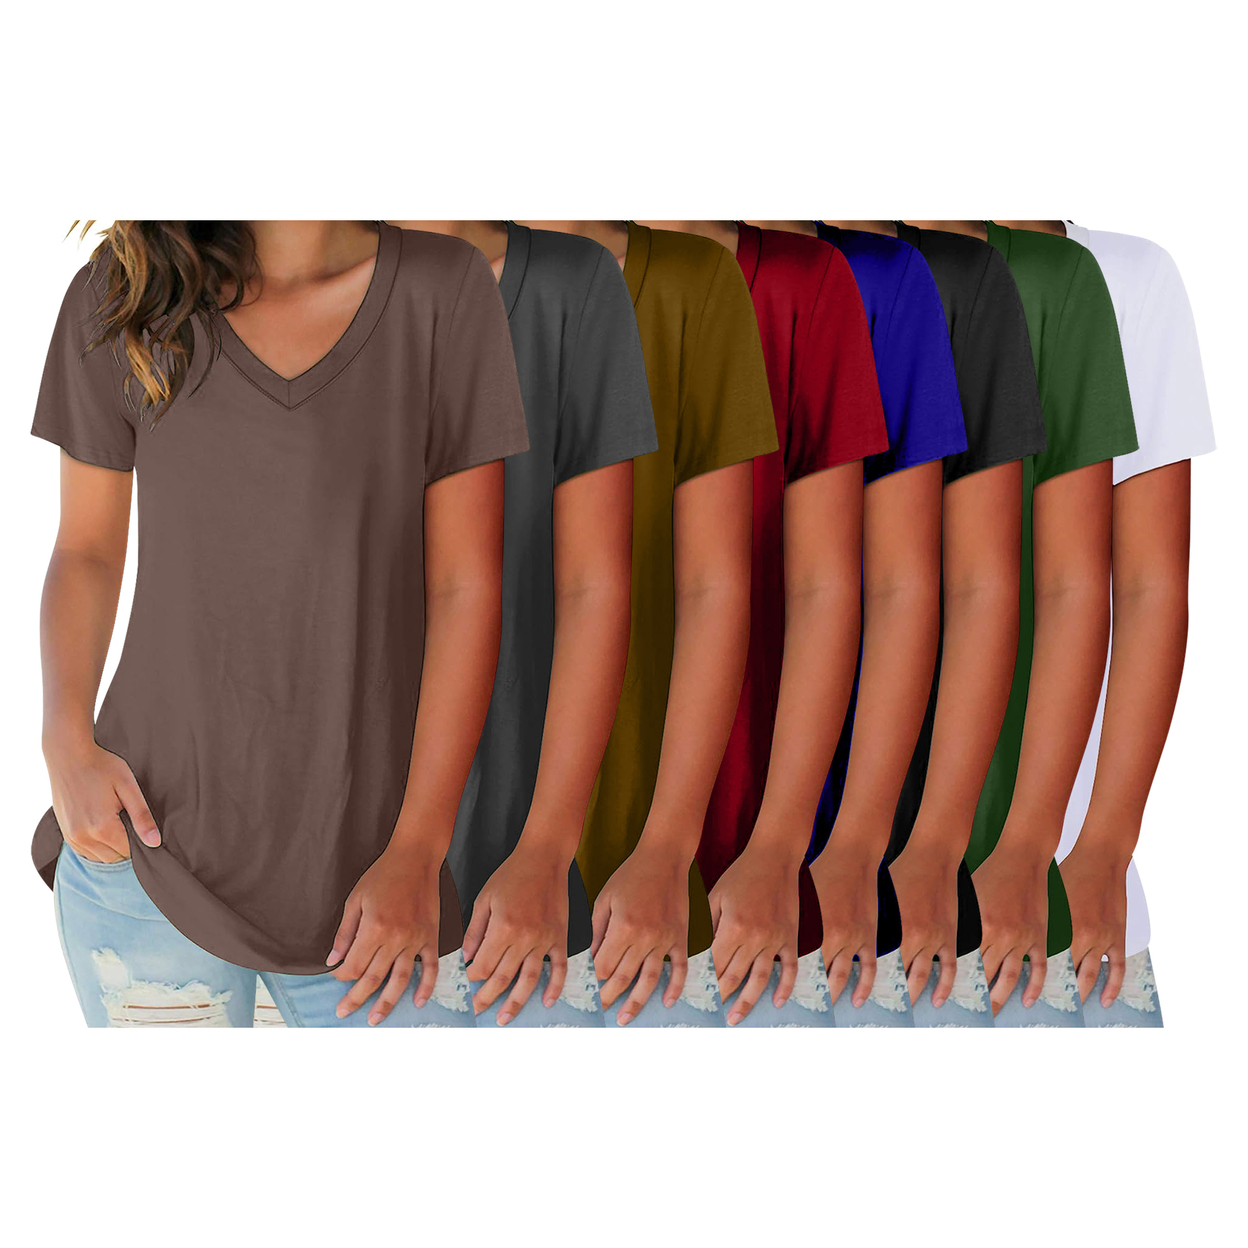 2-Pack: Women's Ultra Soft Smooth Cotton Blend Basic V-Neck Short Sleeve Shirts - Navy & Brown, Medium